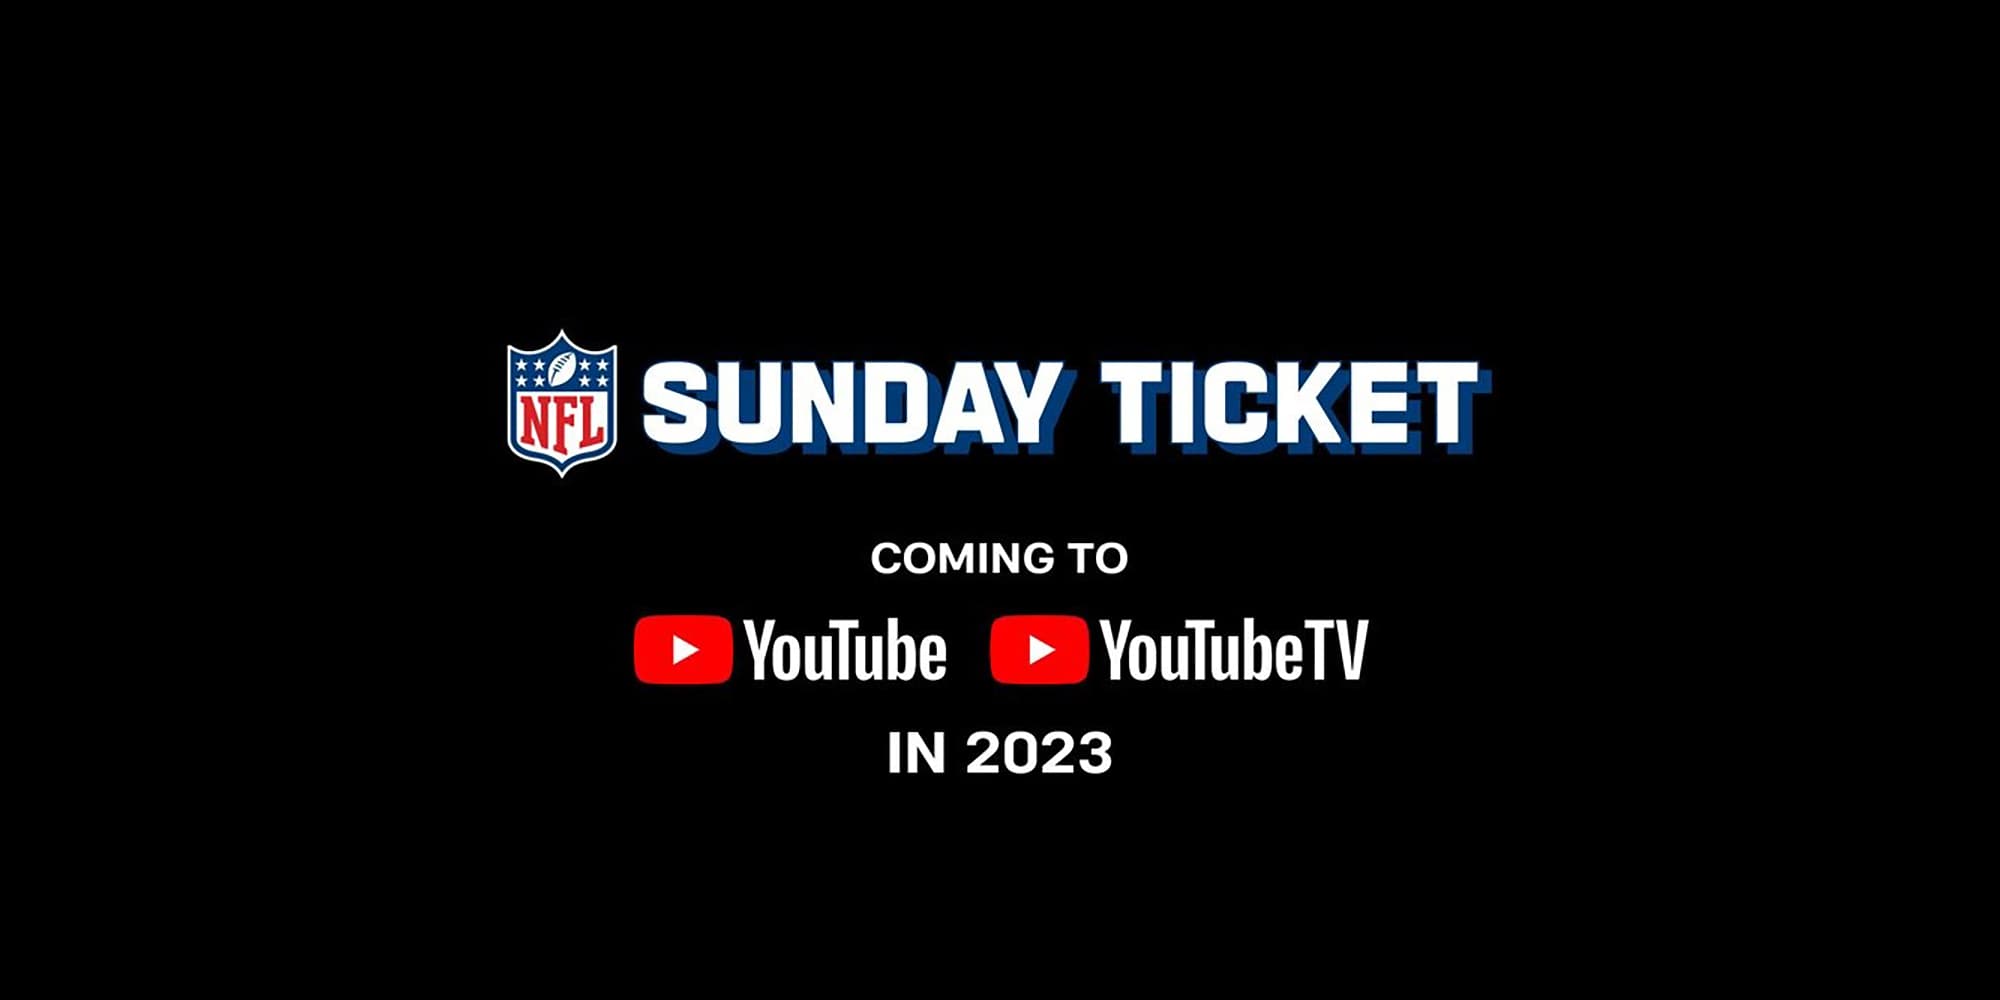 youtube tv sunday ticket cost